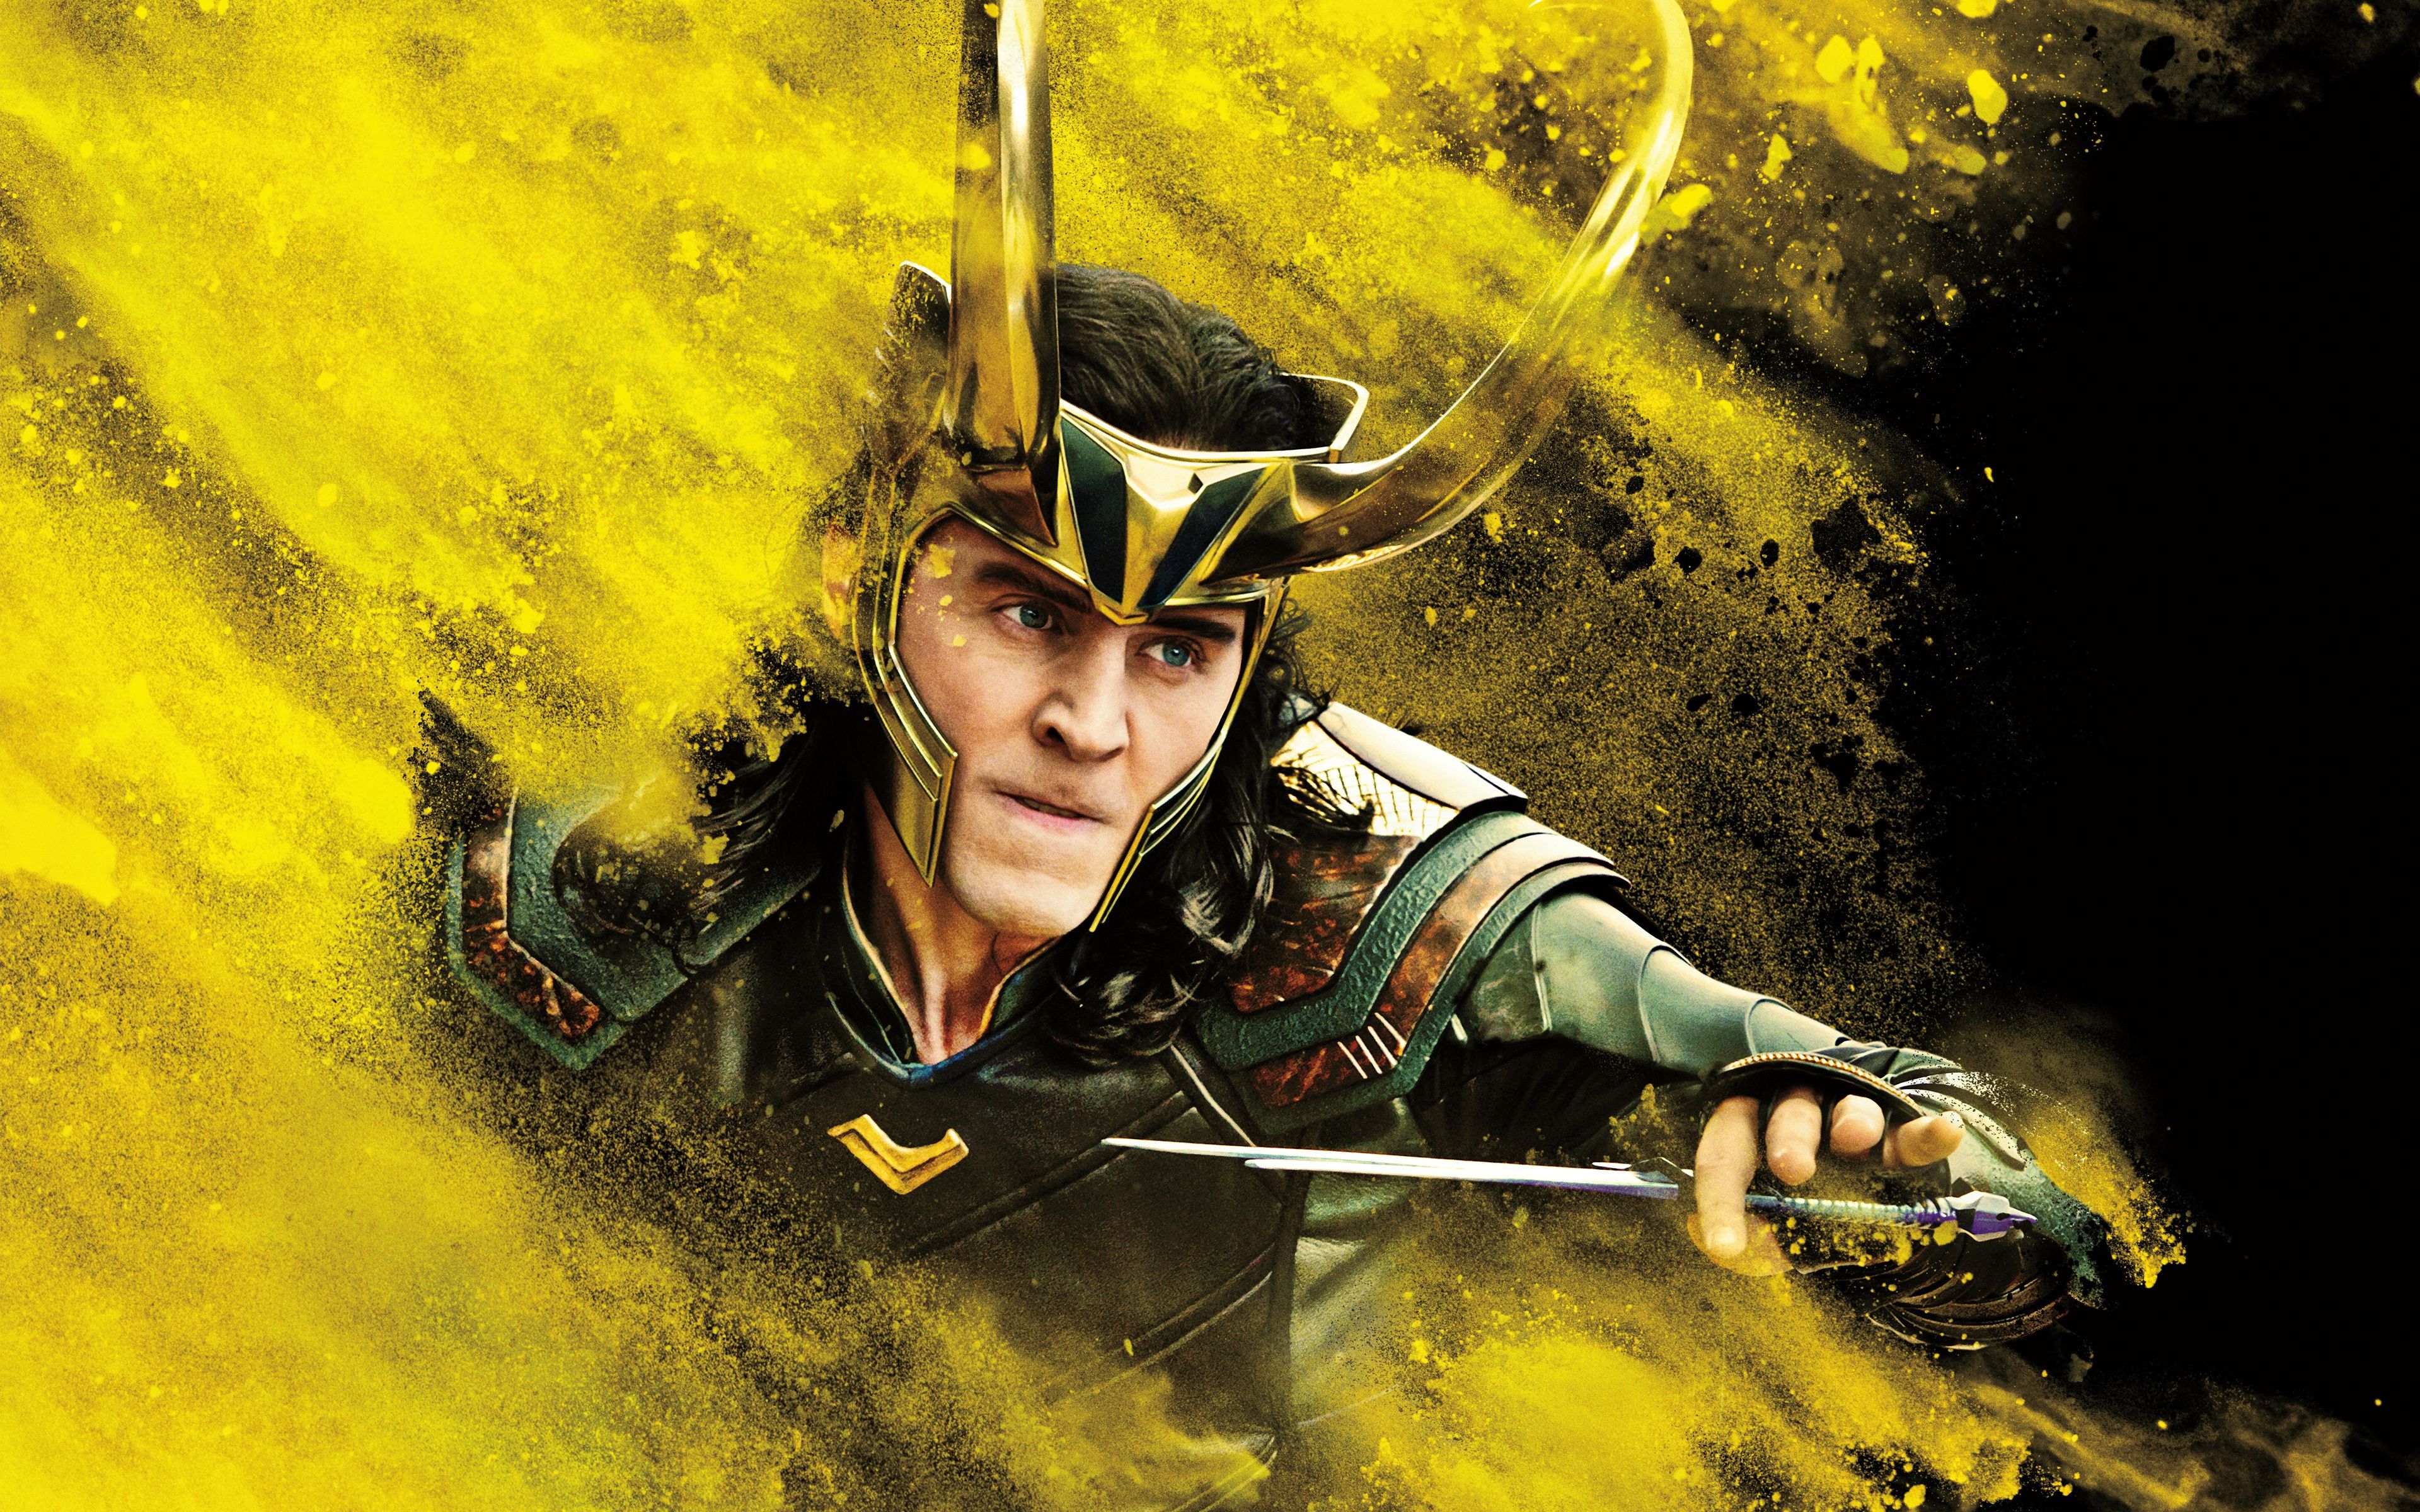 Loki HD Wallpapers Free Download 